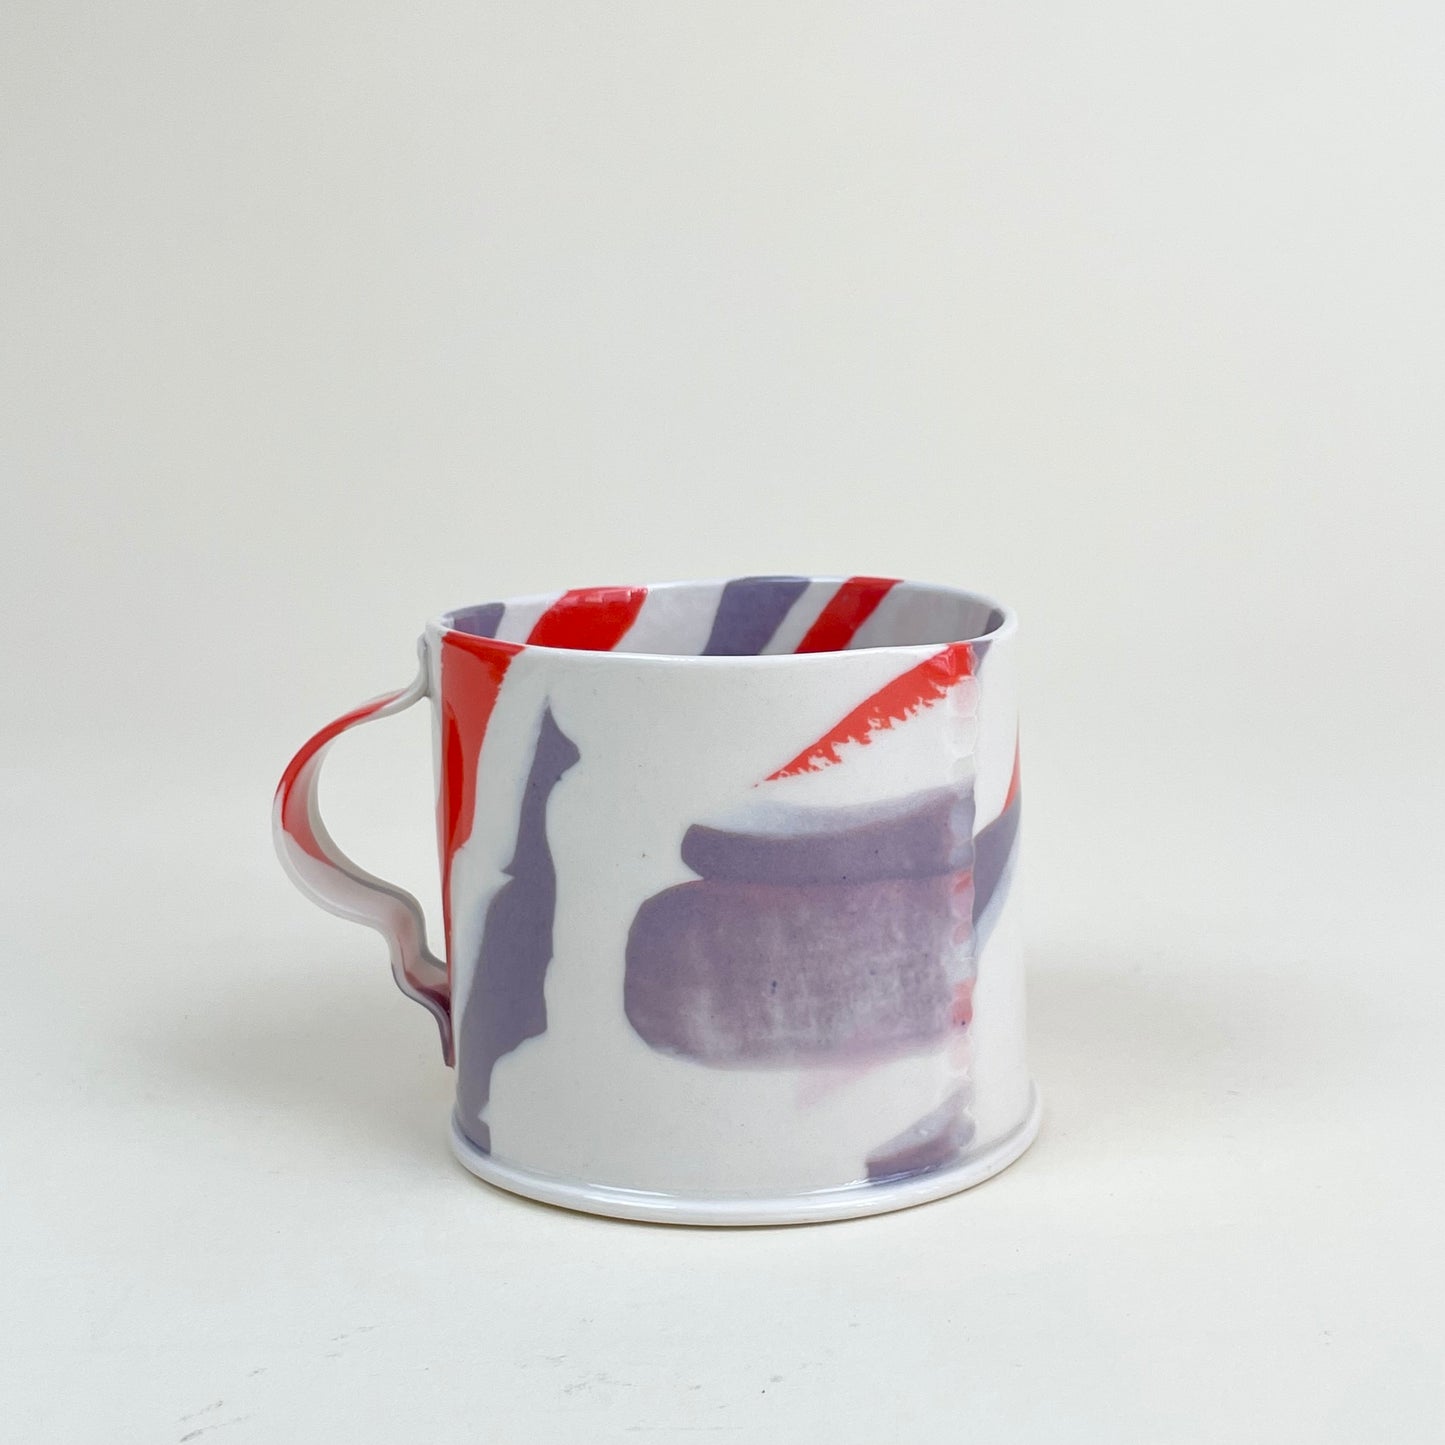 Ceramic mug by Emma Berzén (cream red purple)